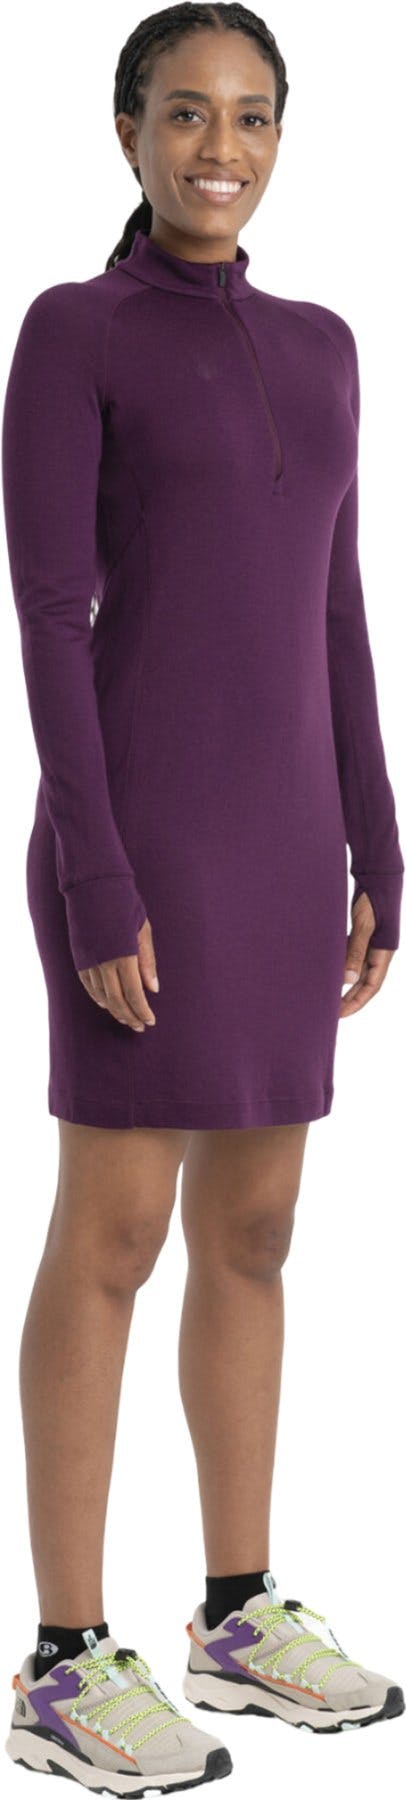 Product image for Merino 260 Granary Long Sleeve Half Zip Dress - Women's